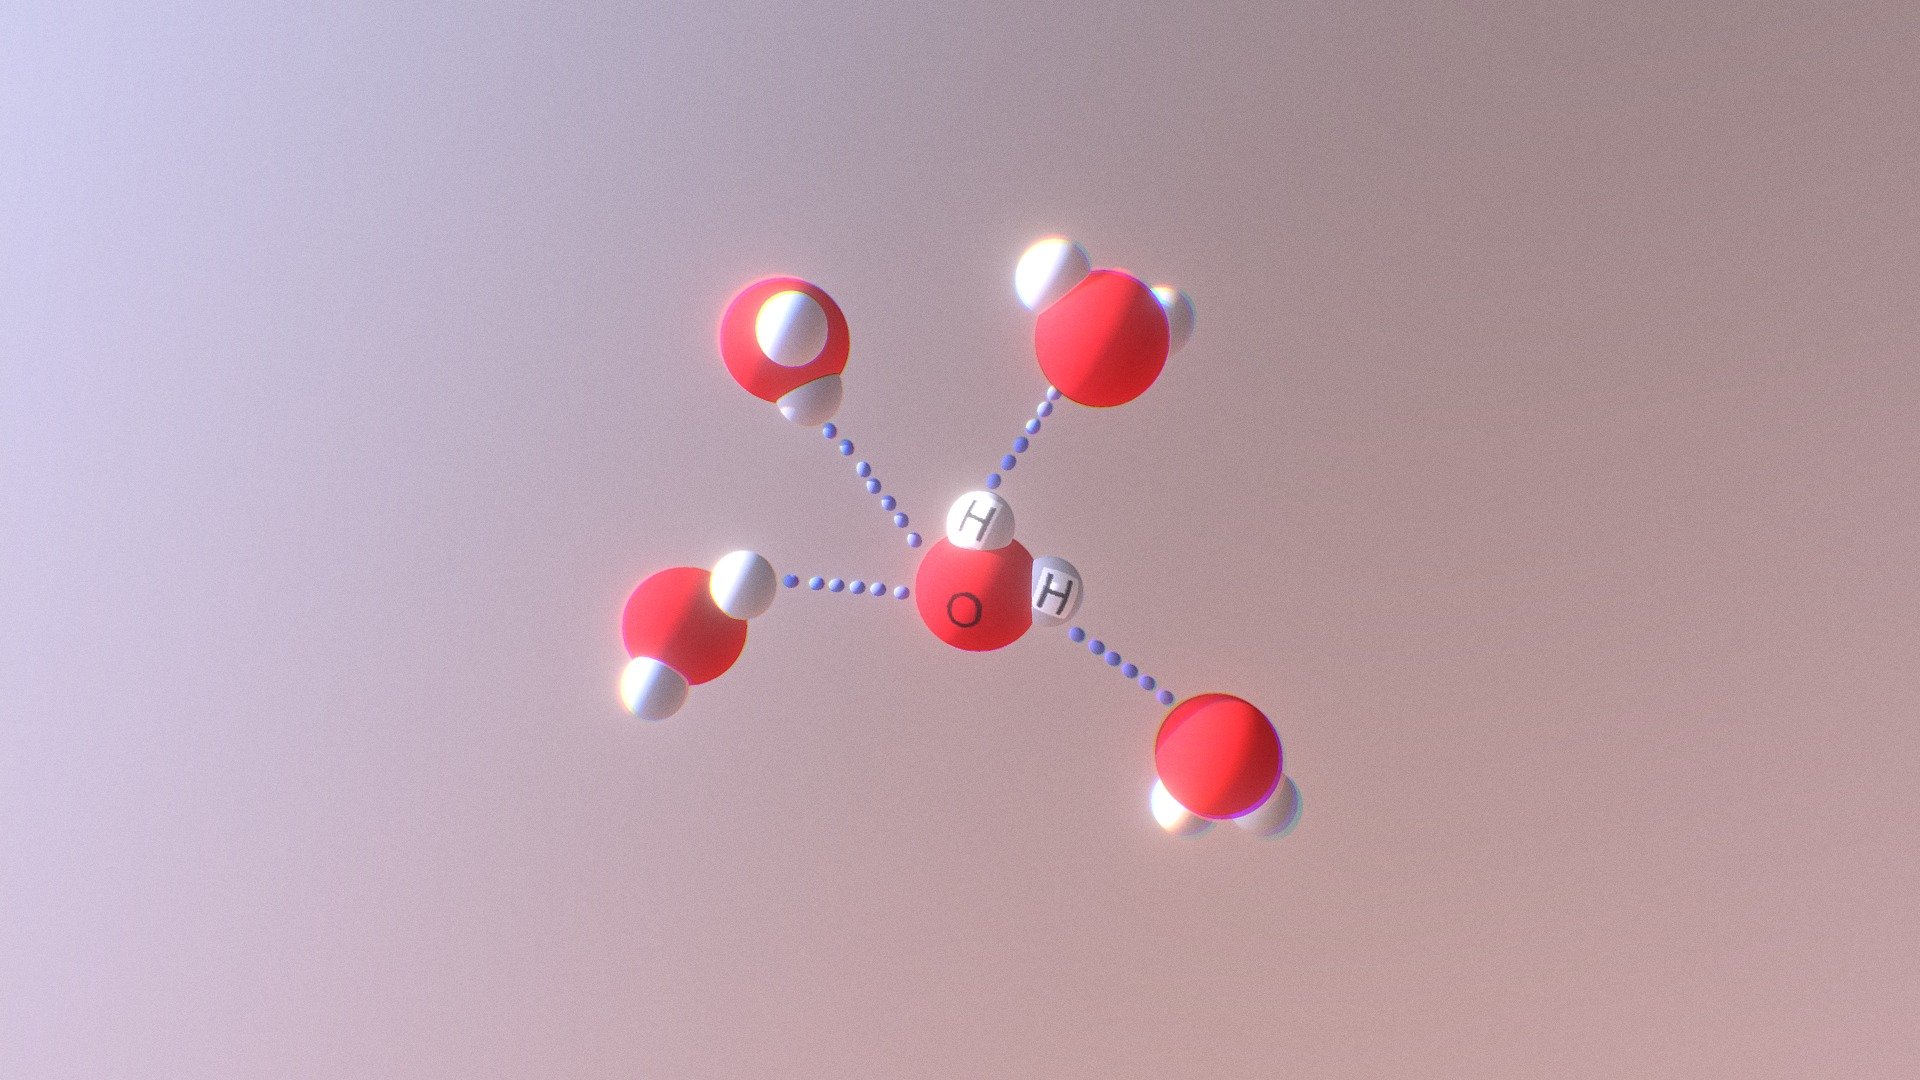 hydrogen bond model